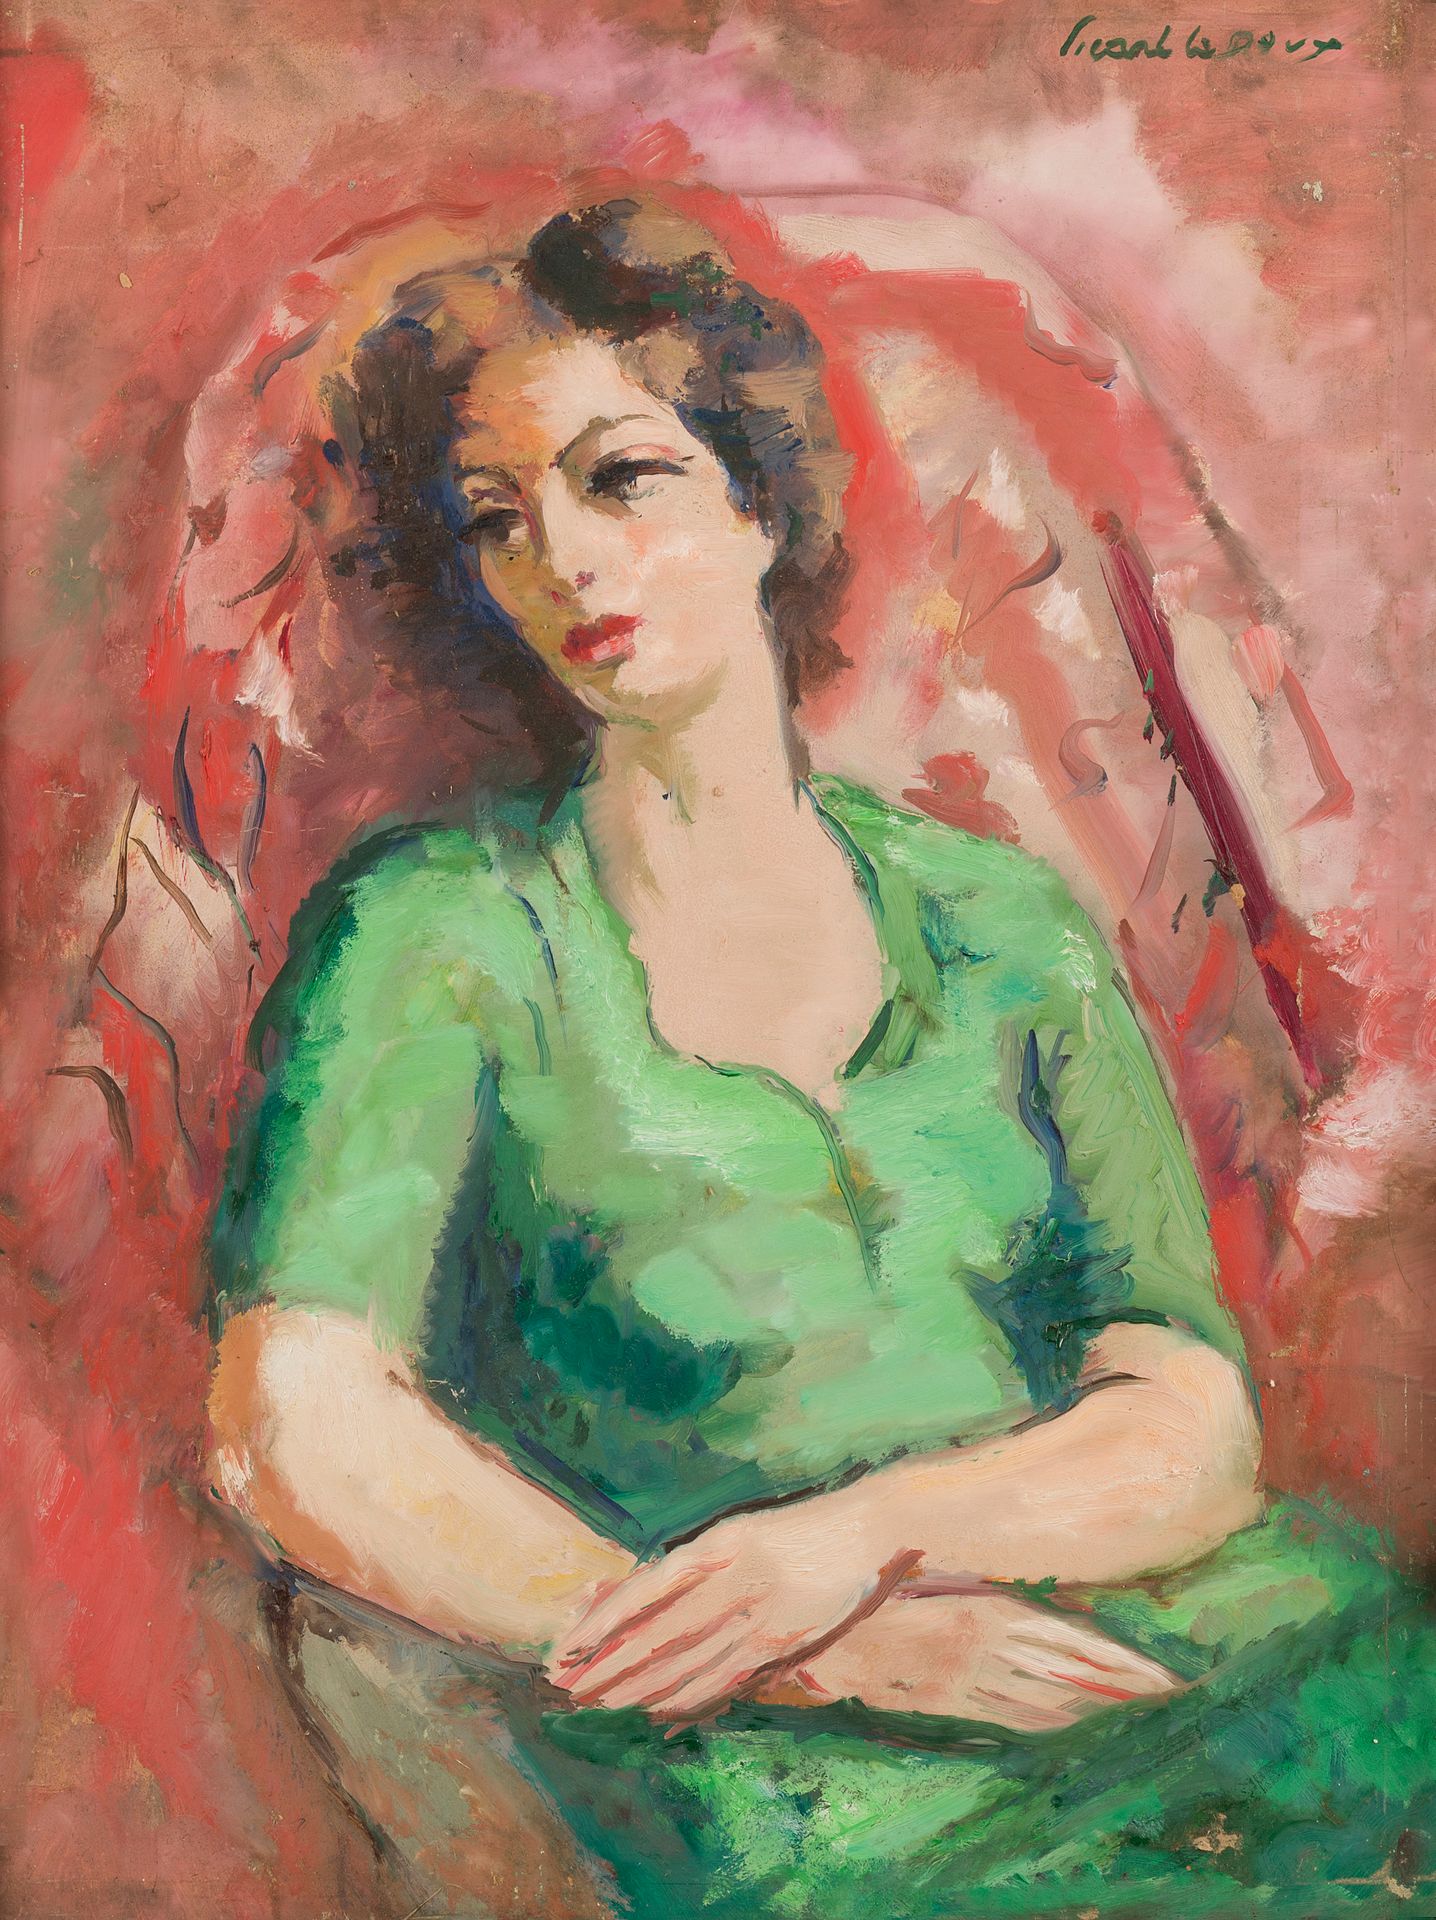 Null 查尔斯-皮卡特-勒杜(1881-1959)
坐在扶手椅上的杰奎琳-皮卡特-勒-杜克斯，1951年
右上角有签名的伊索尔油彩
61 x 46 cm